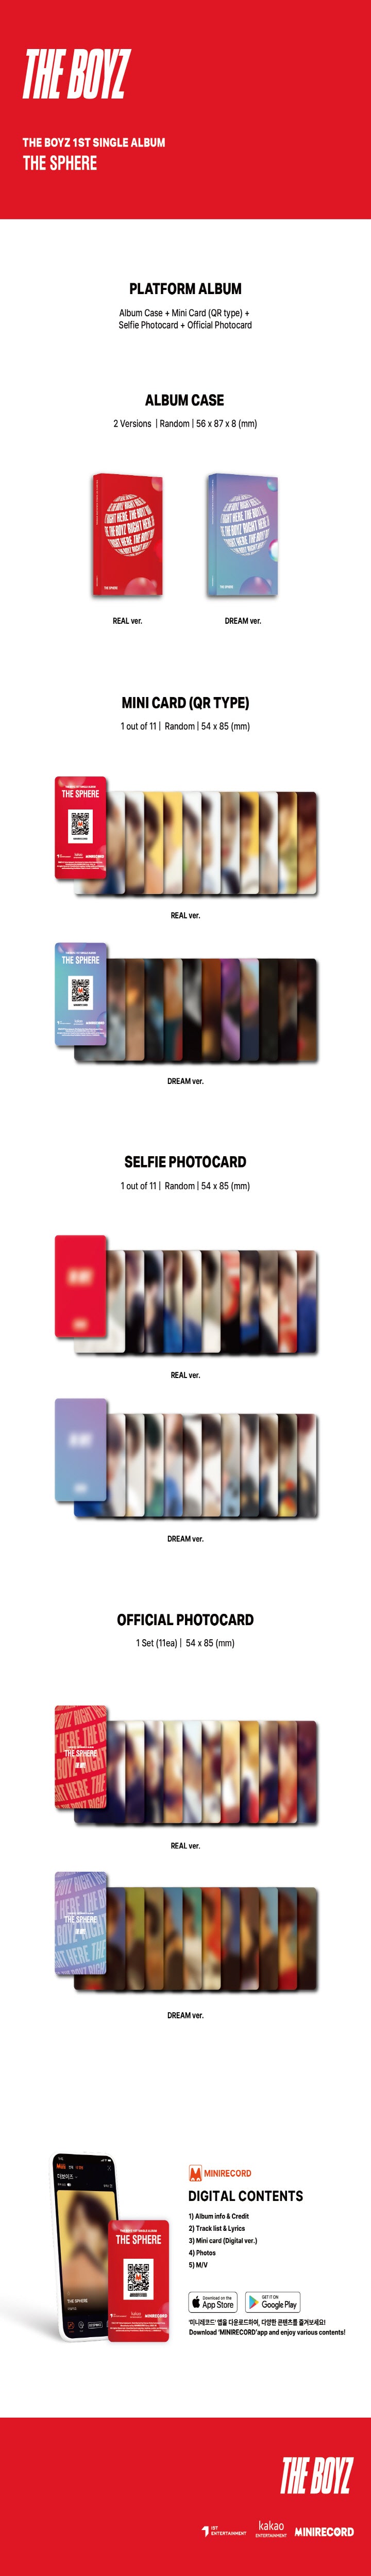 1 Mini Card (QR Type, random out of 11 types)
1 Selfie Photo Card (random out of 11 types)
11 Official Photo Cards